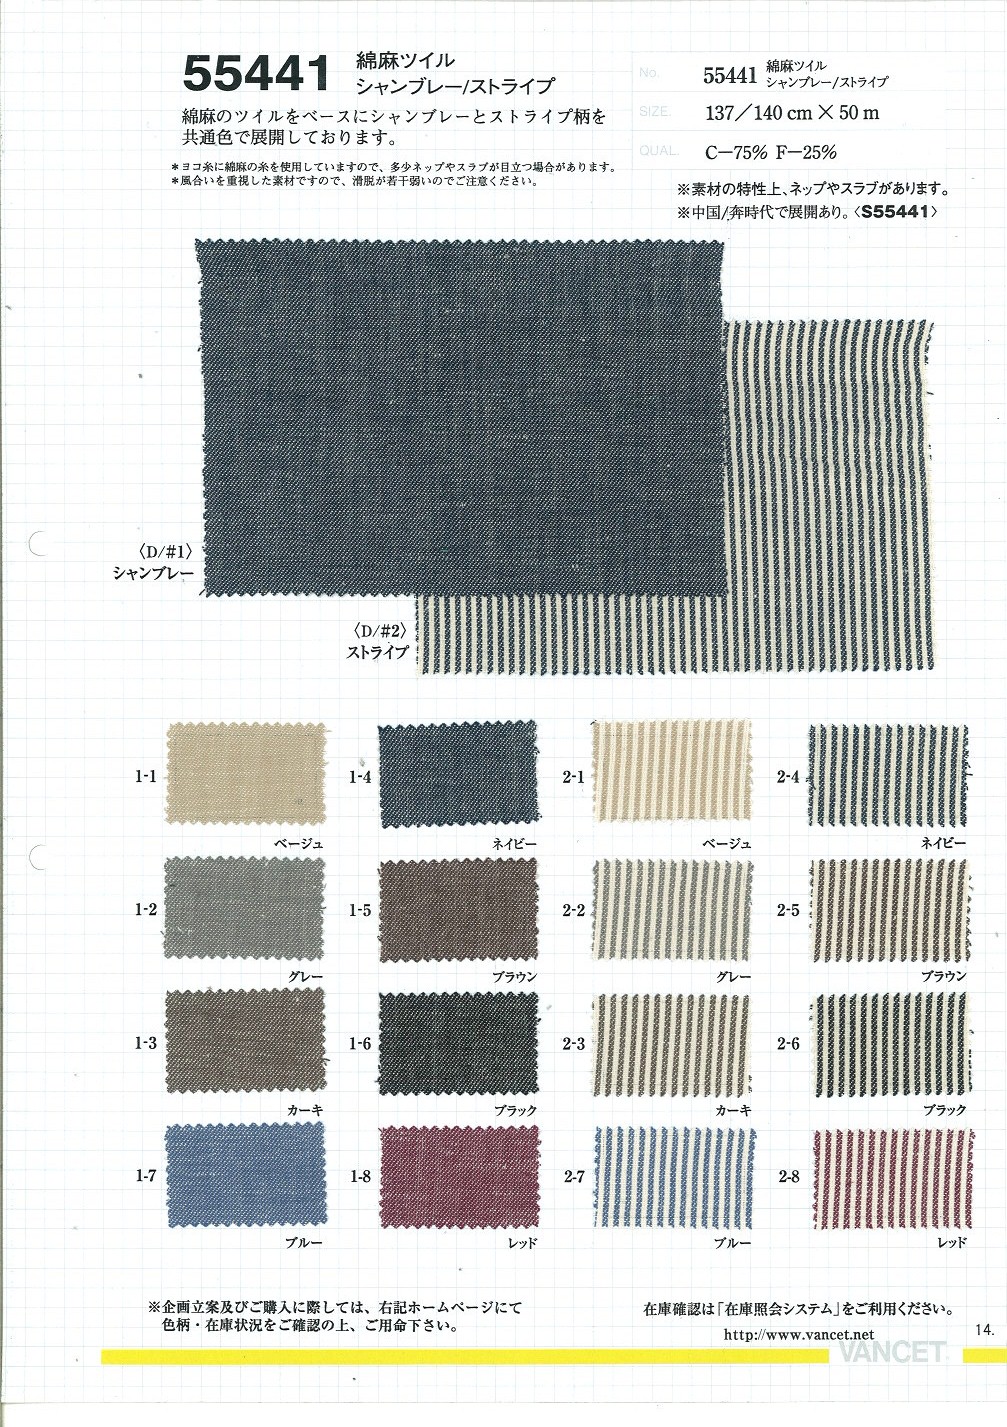 55441 Lin Lin Sergé Chambray/rayure[Fabrication De Textile] VANCET